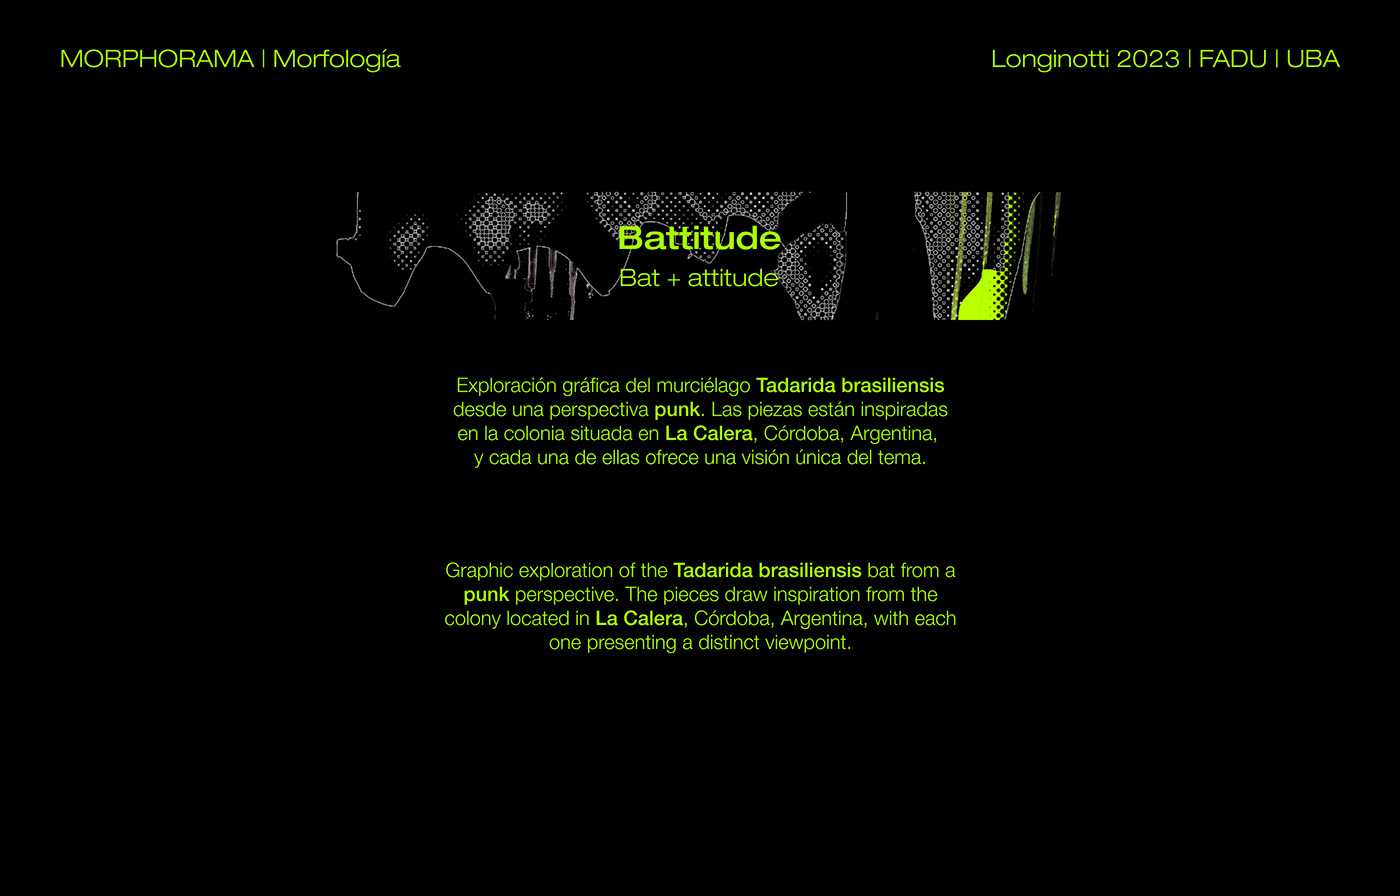 diseño gráfico longinotti fadu uba collage Graphic Designer murcielago bat morfologia morfologia longinotti